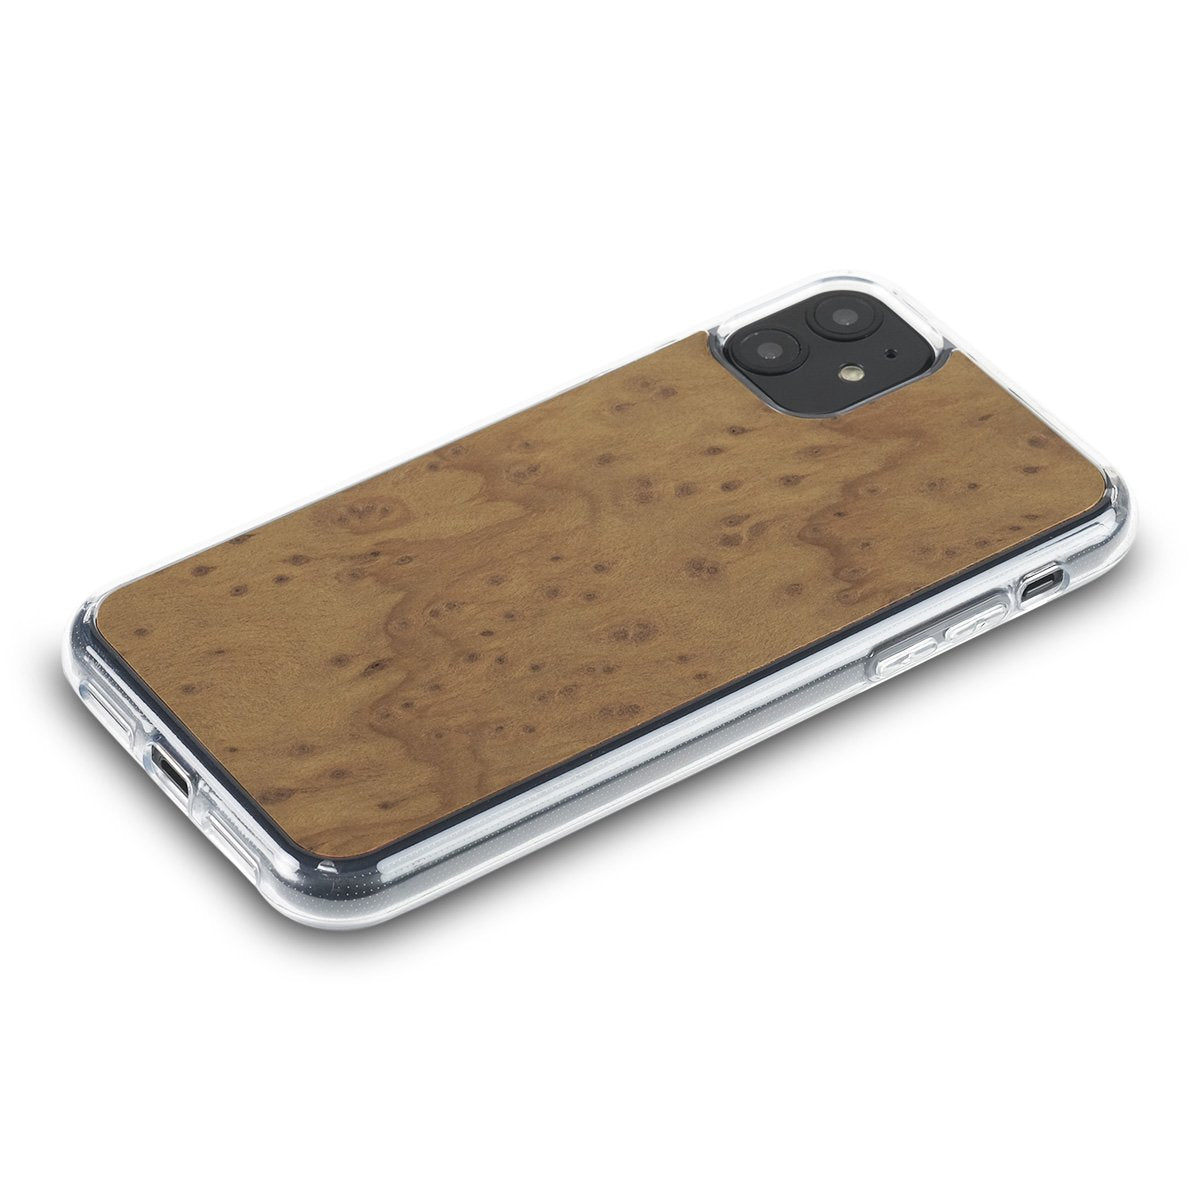 iPhone 11 Pro — #WoodBack Explorer Clear Case